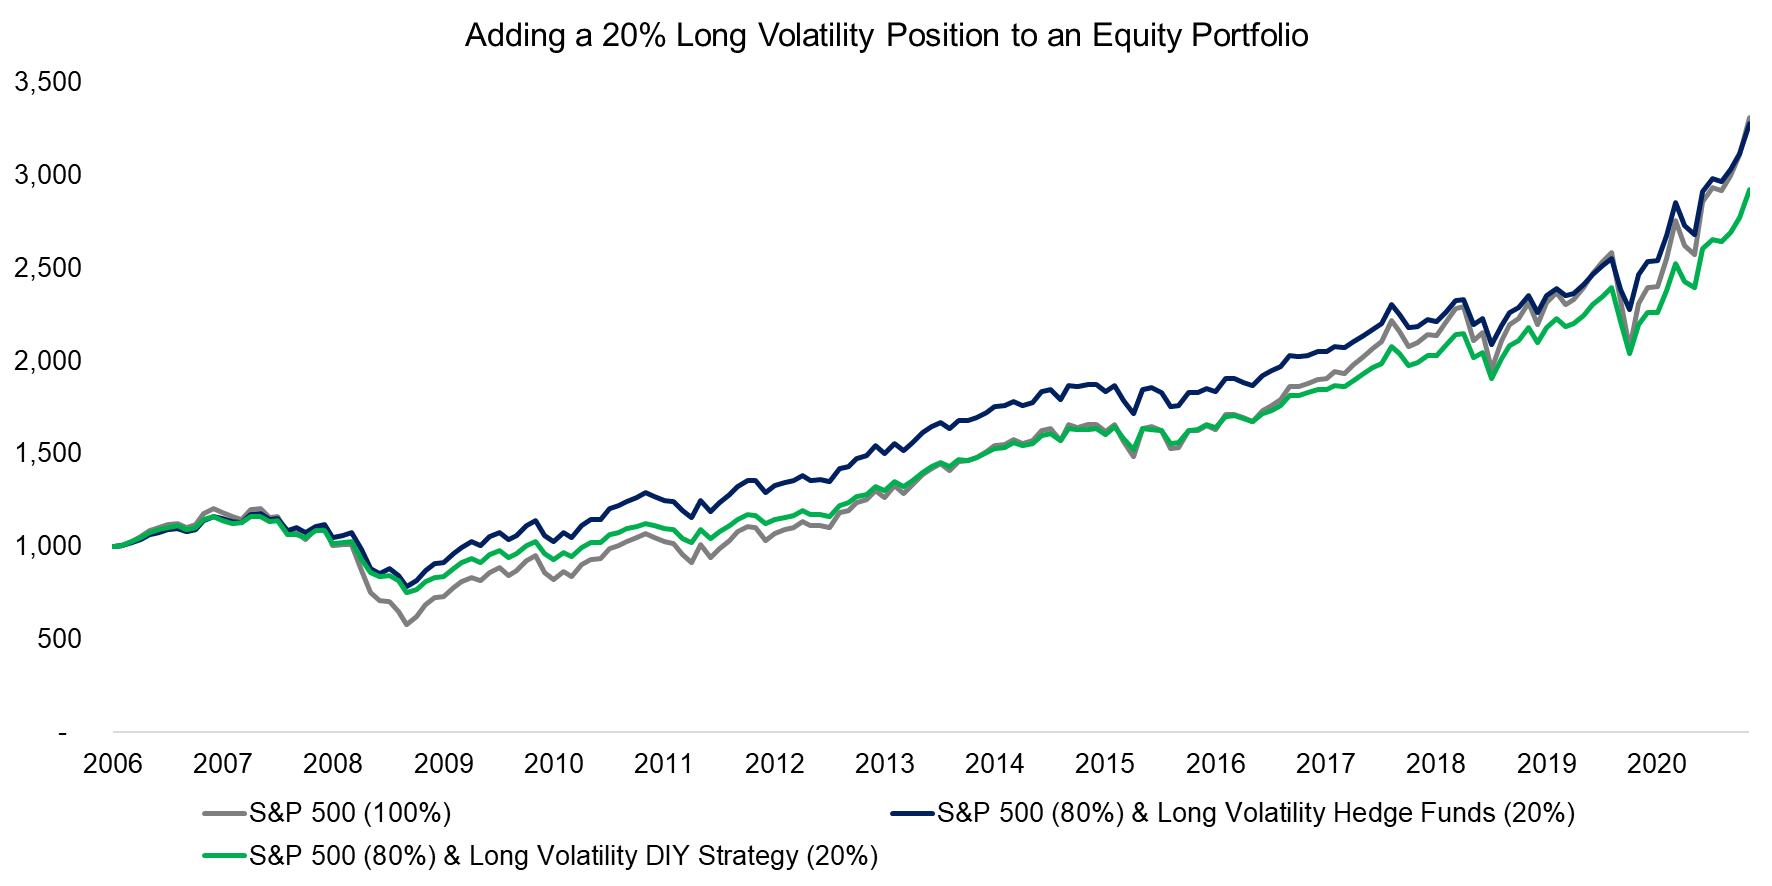 Adding a 20% Long Volatility Position to an Equity Portfolio